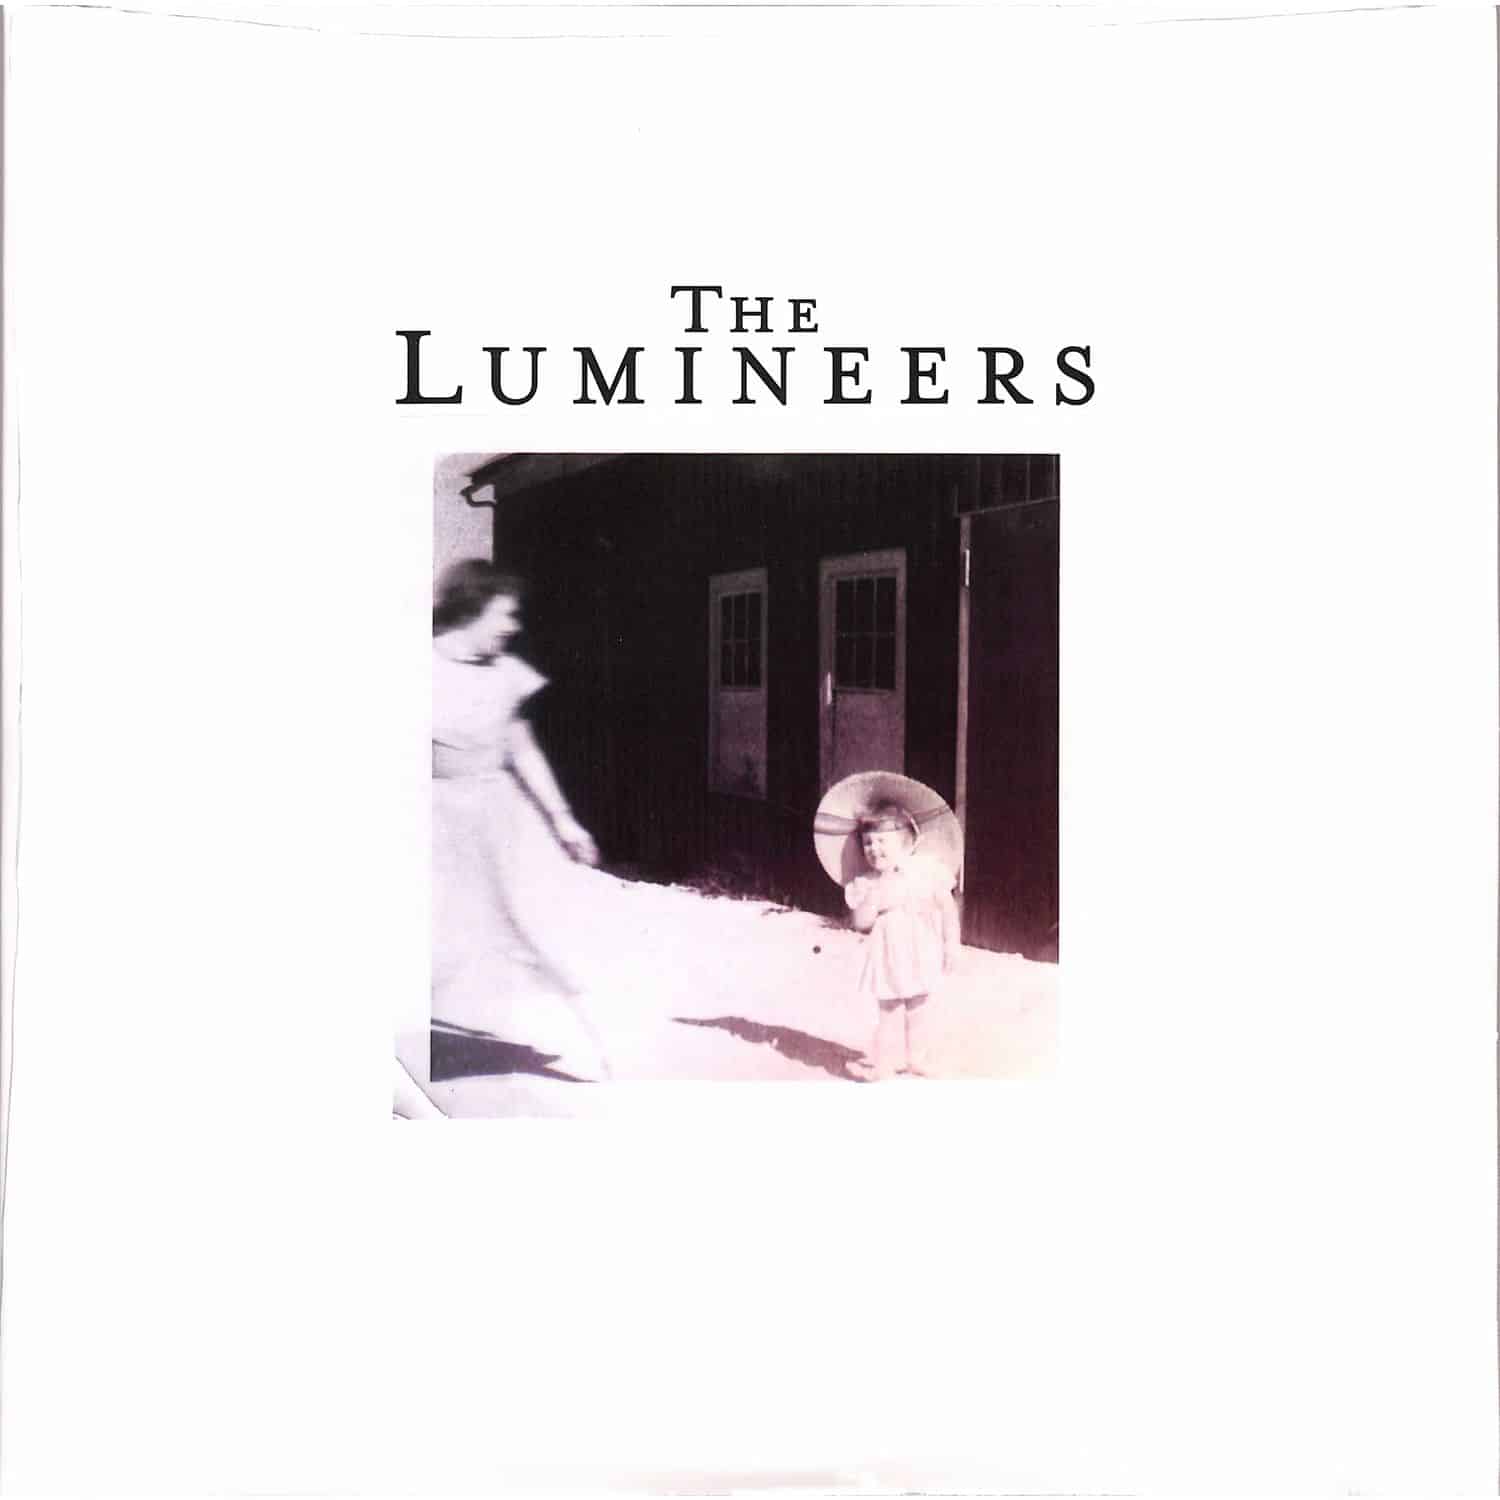 The Lumineers - THE LUMINEERS 